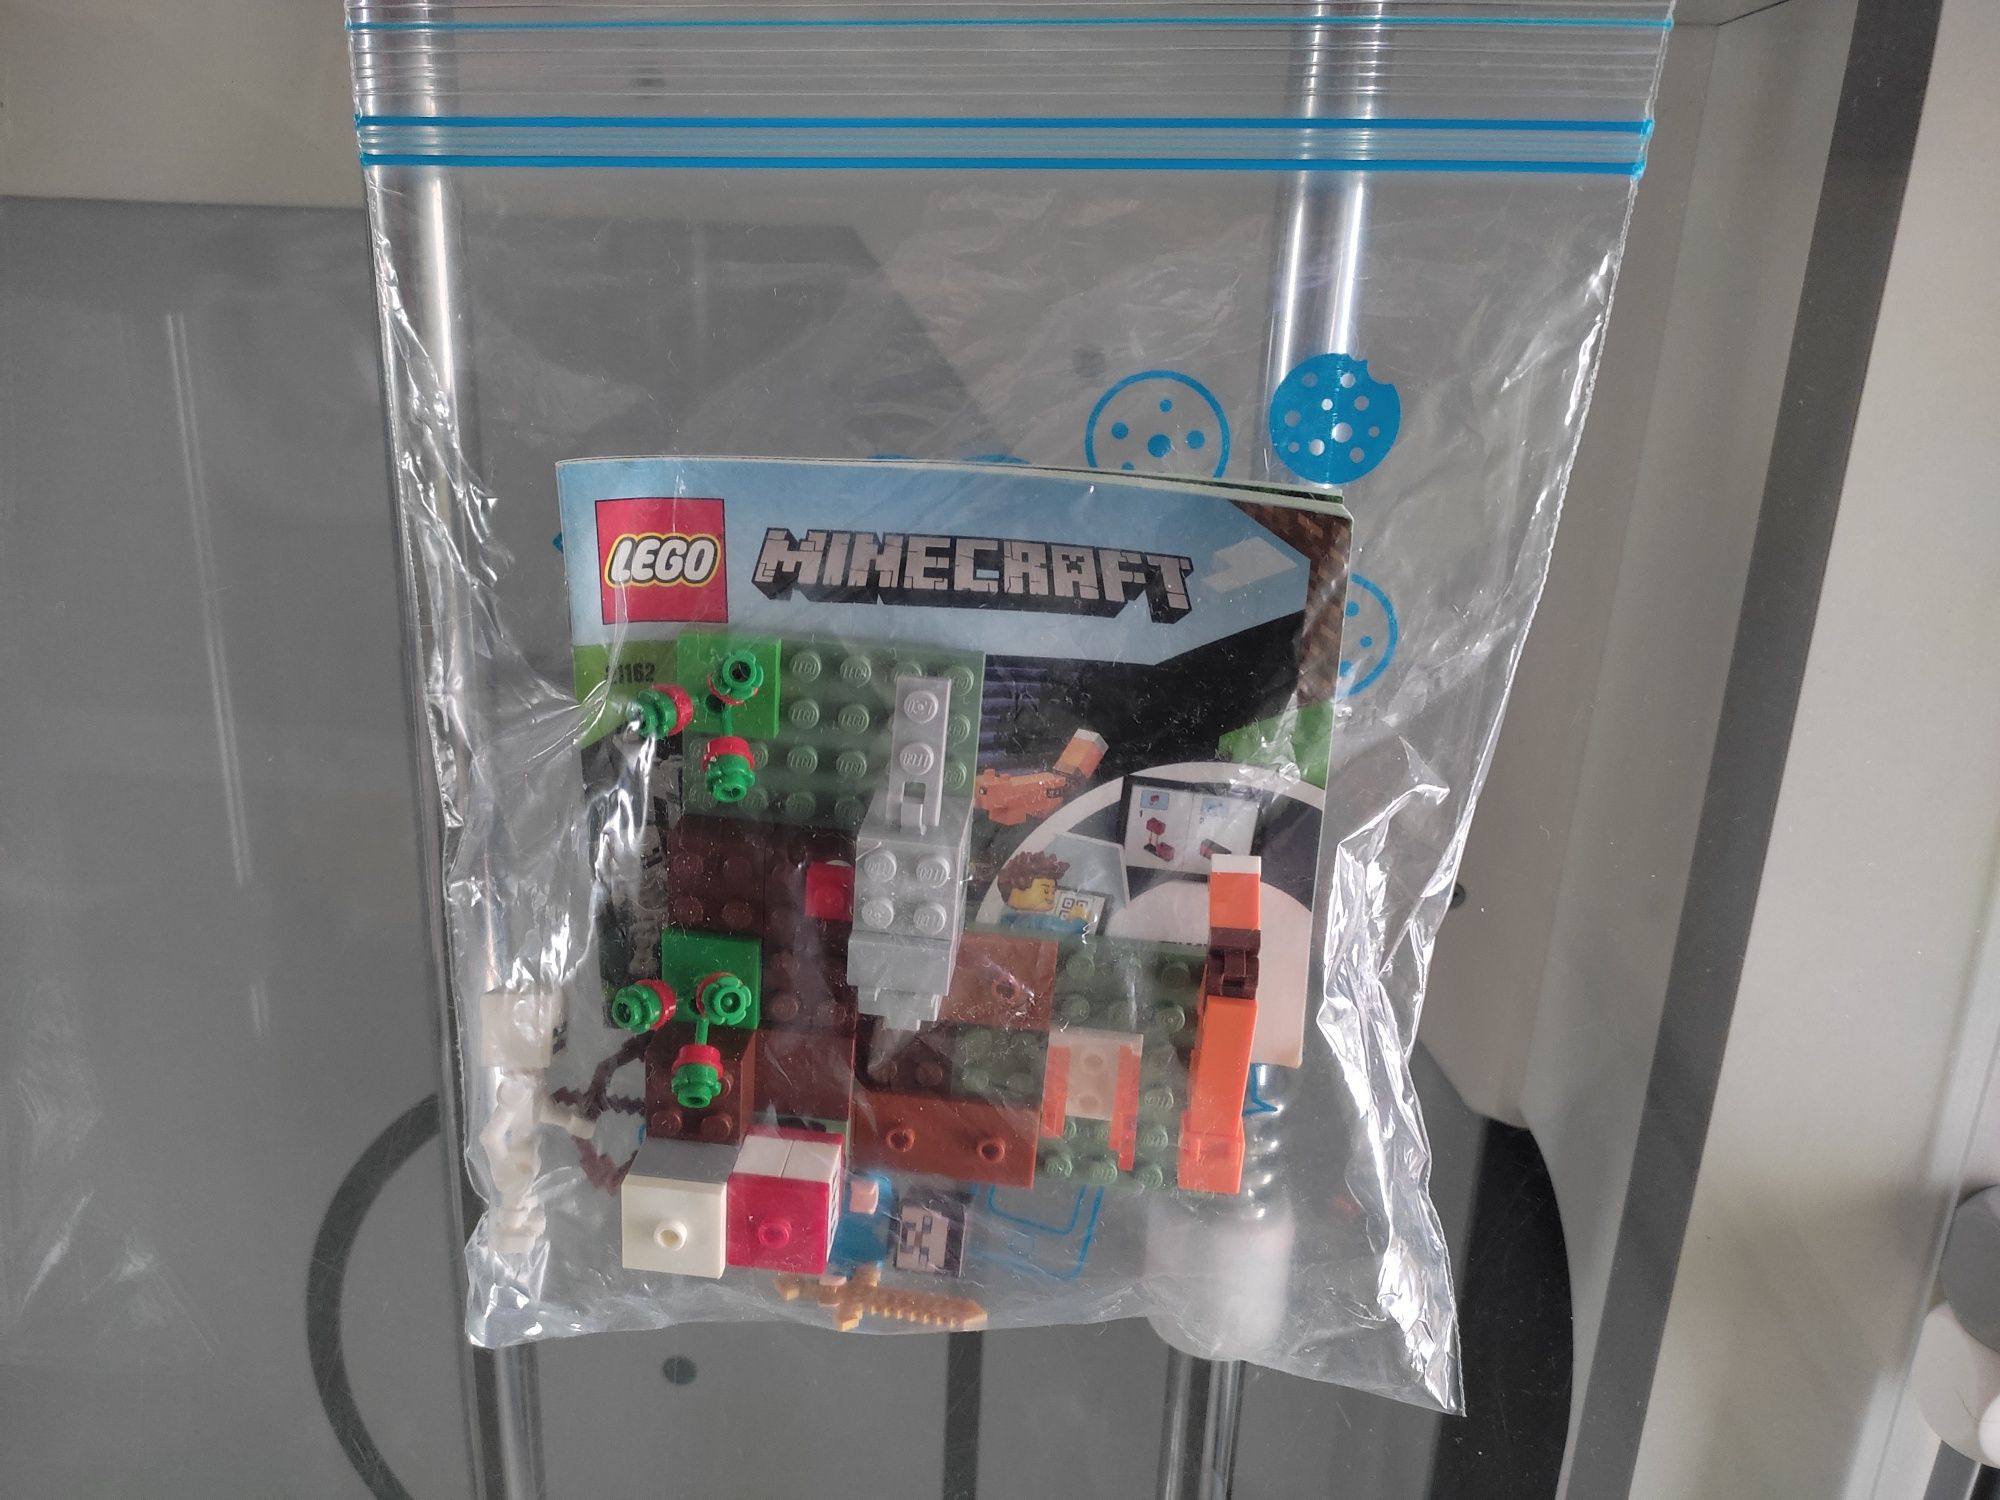 LEGO Minecraft 21162